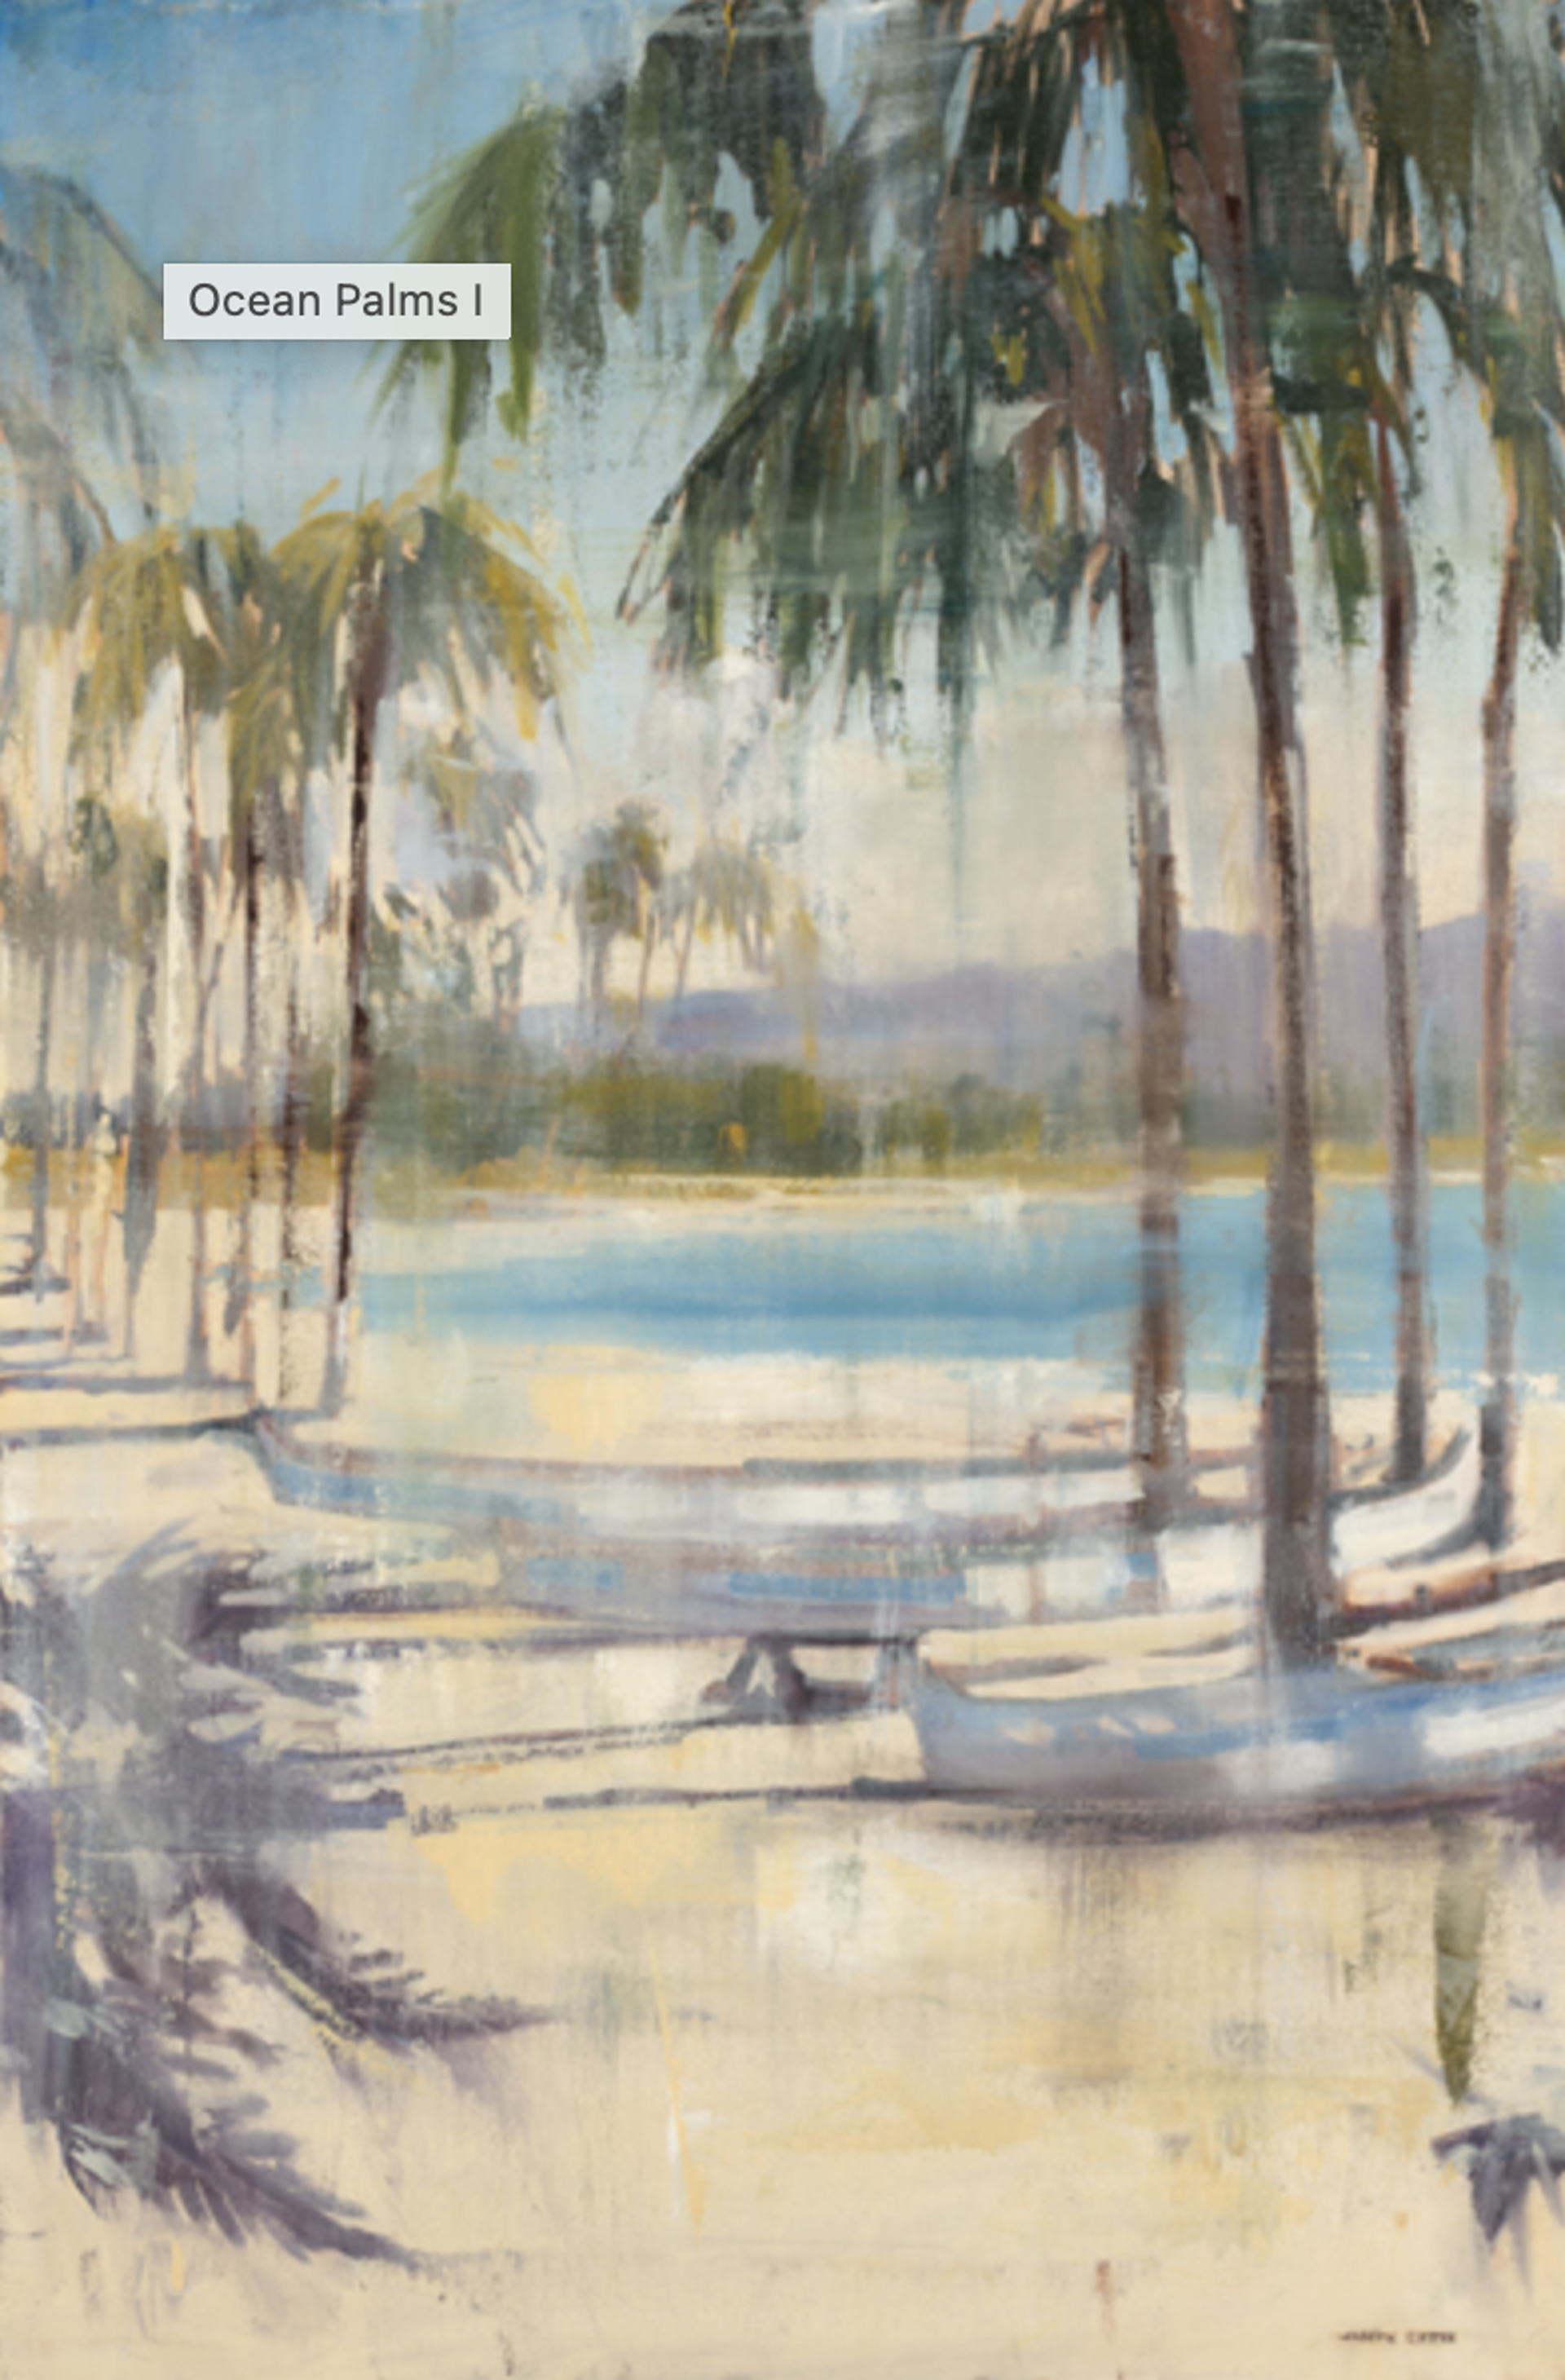 Ocean Palms I by Joseph Cates